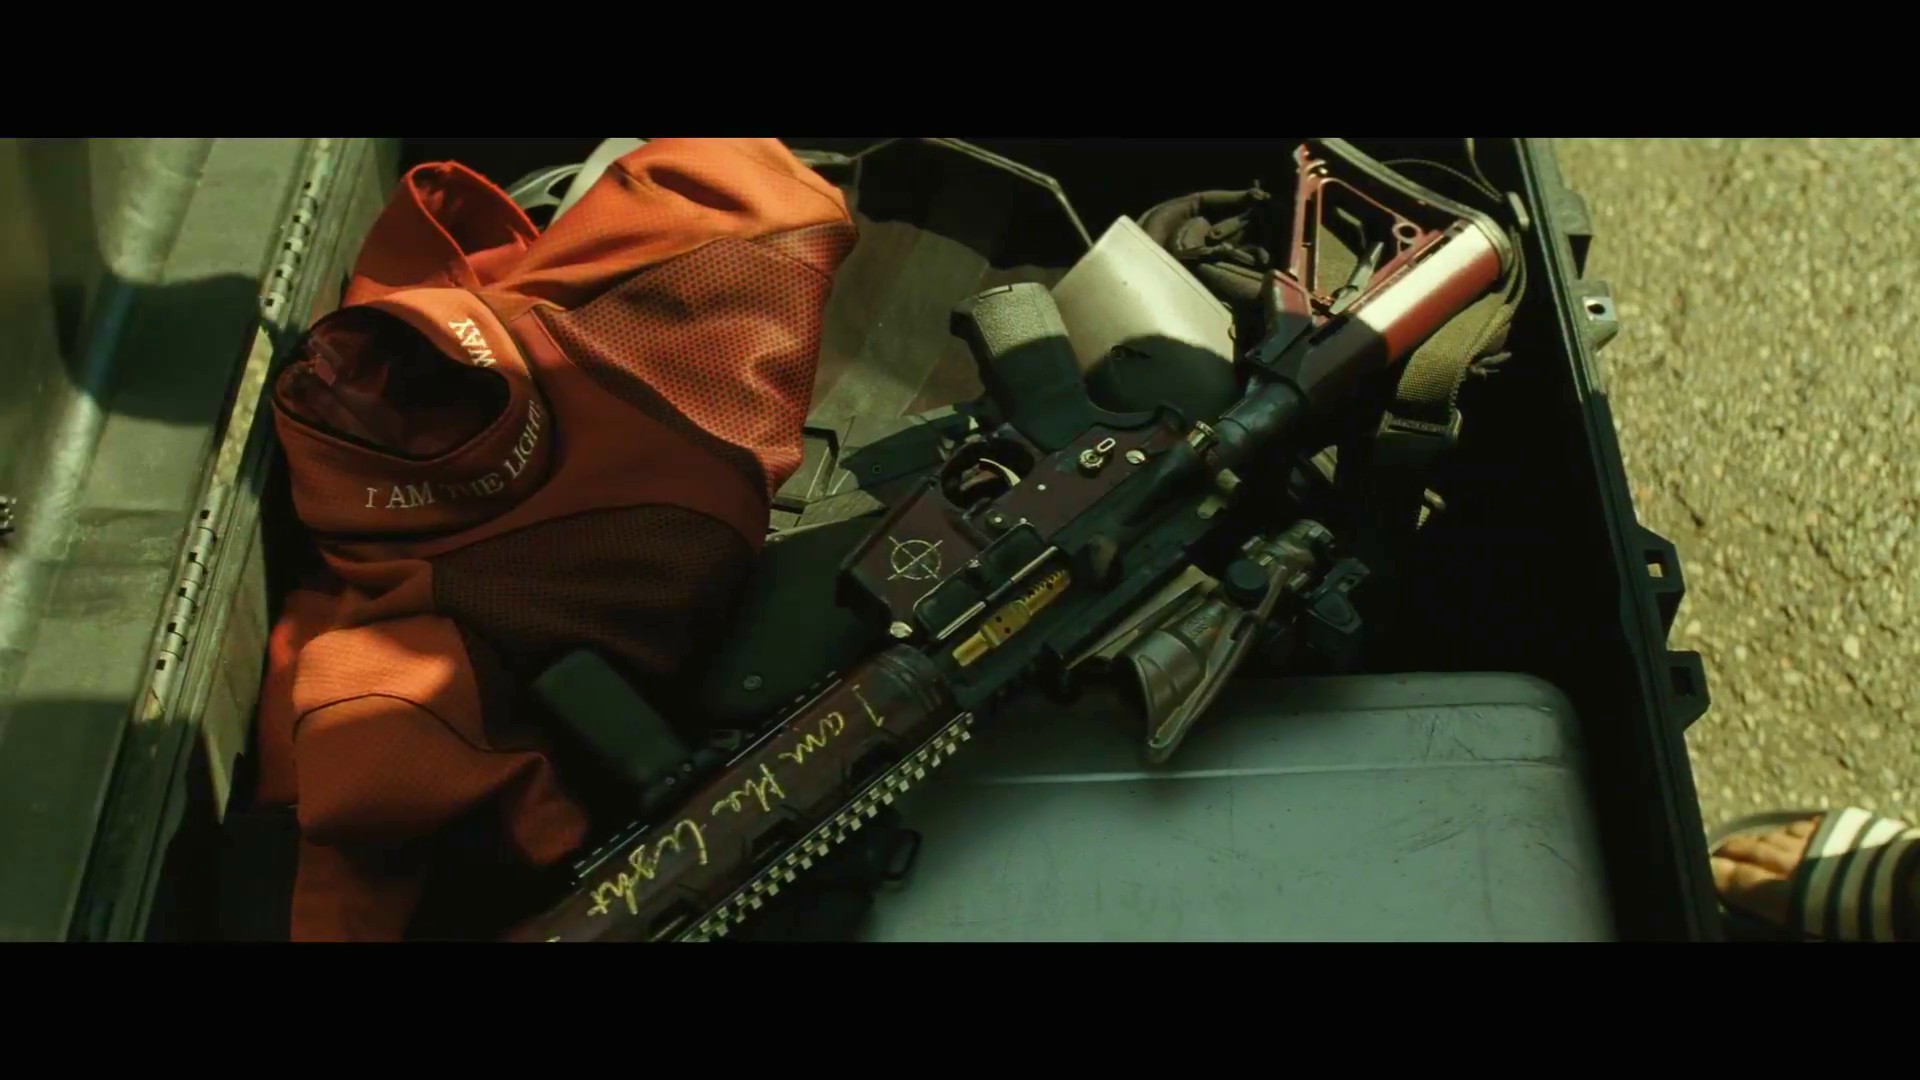 Suicide Squad trailer screenshots